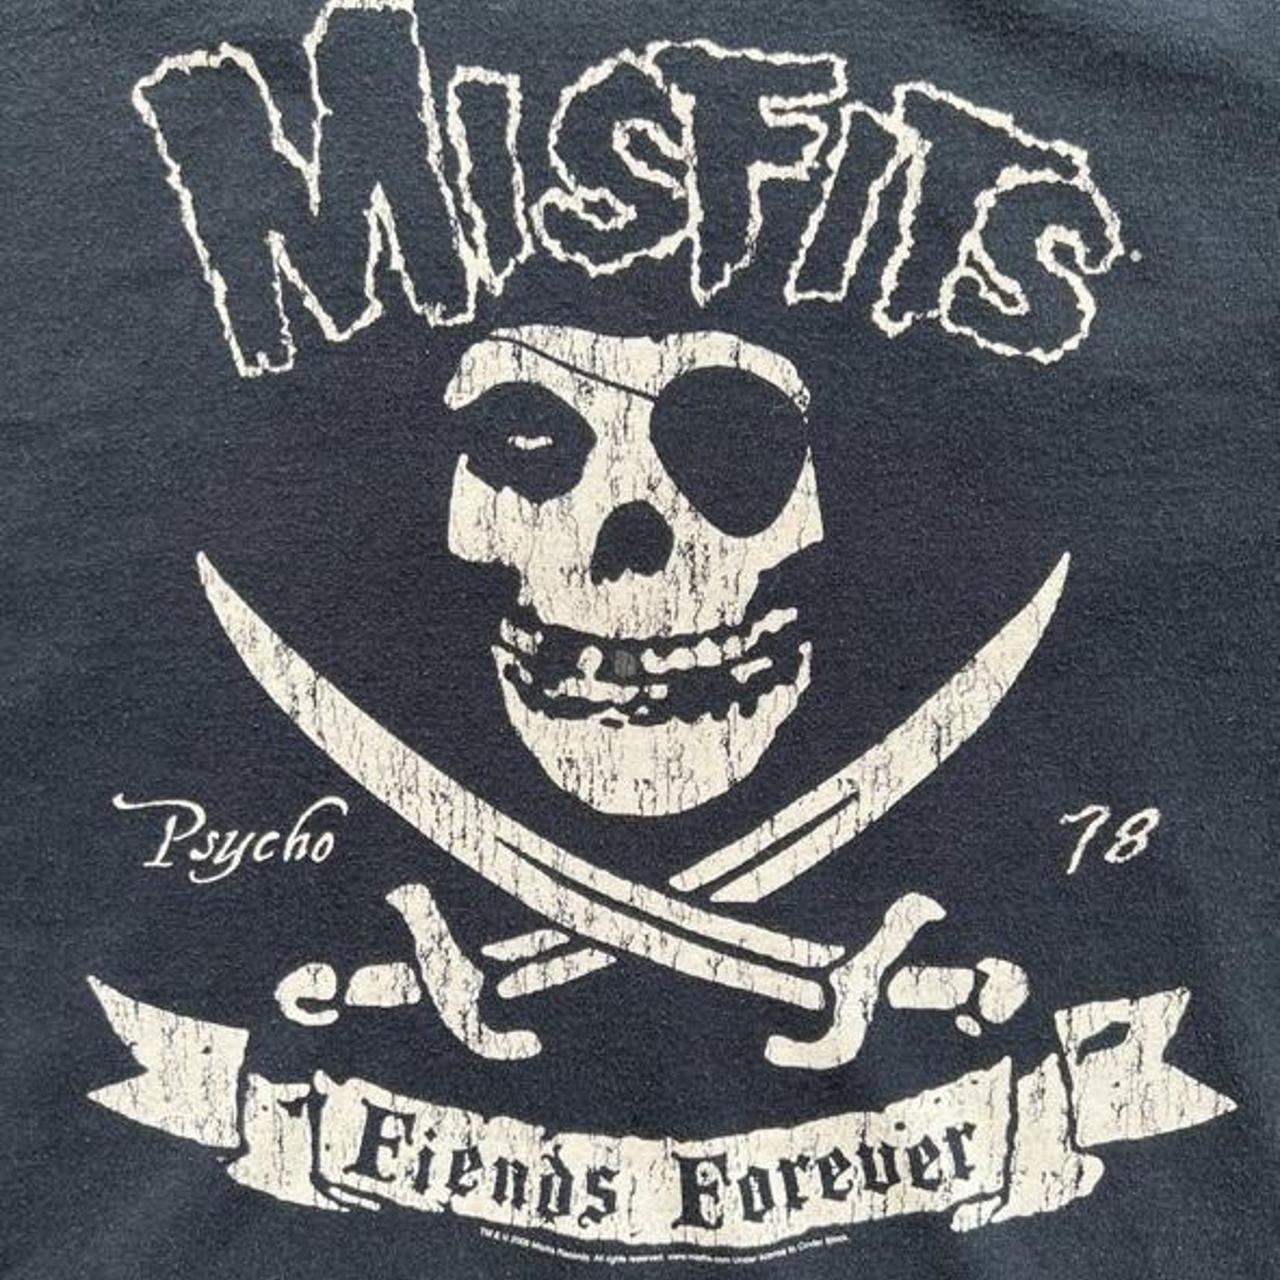 Product Image 2 - Vintage Misfits t-shirt 

Size: XL
Condition: